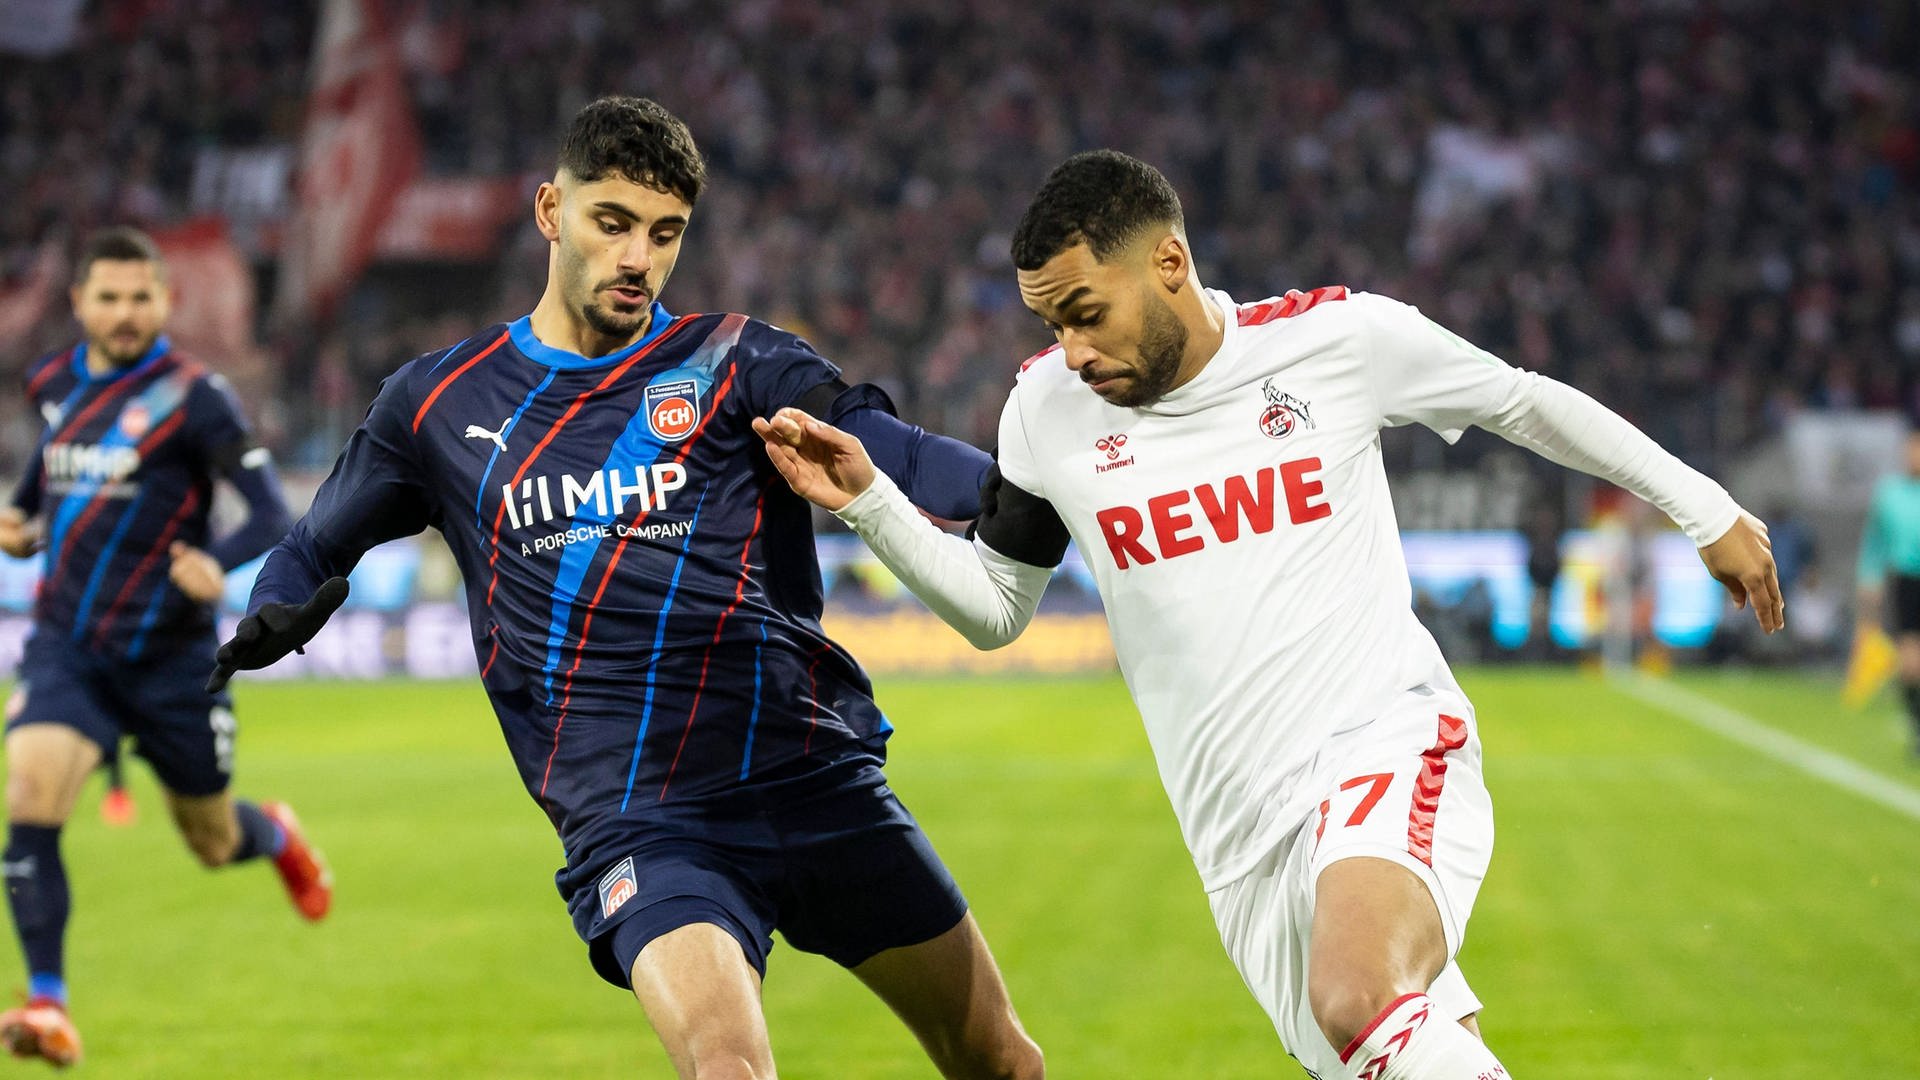 Heidenheim punktet nach Rückstand beim 1. FC Köln